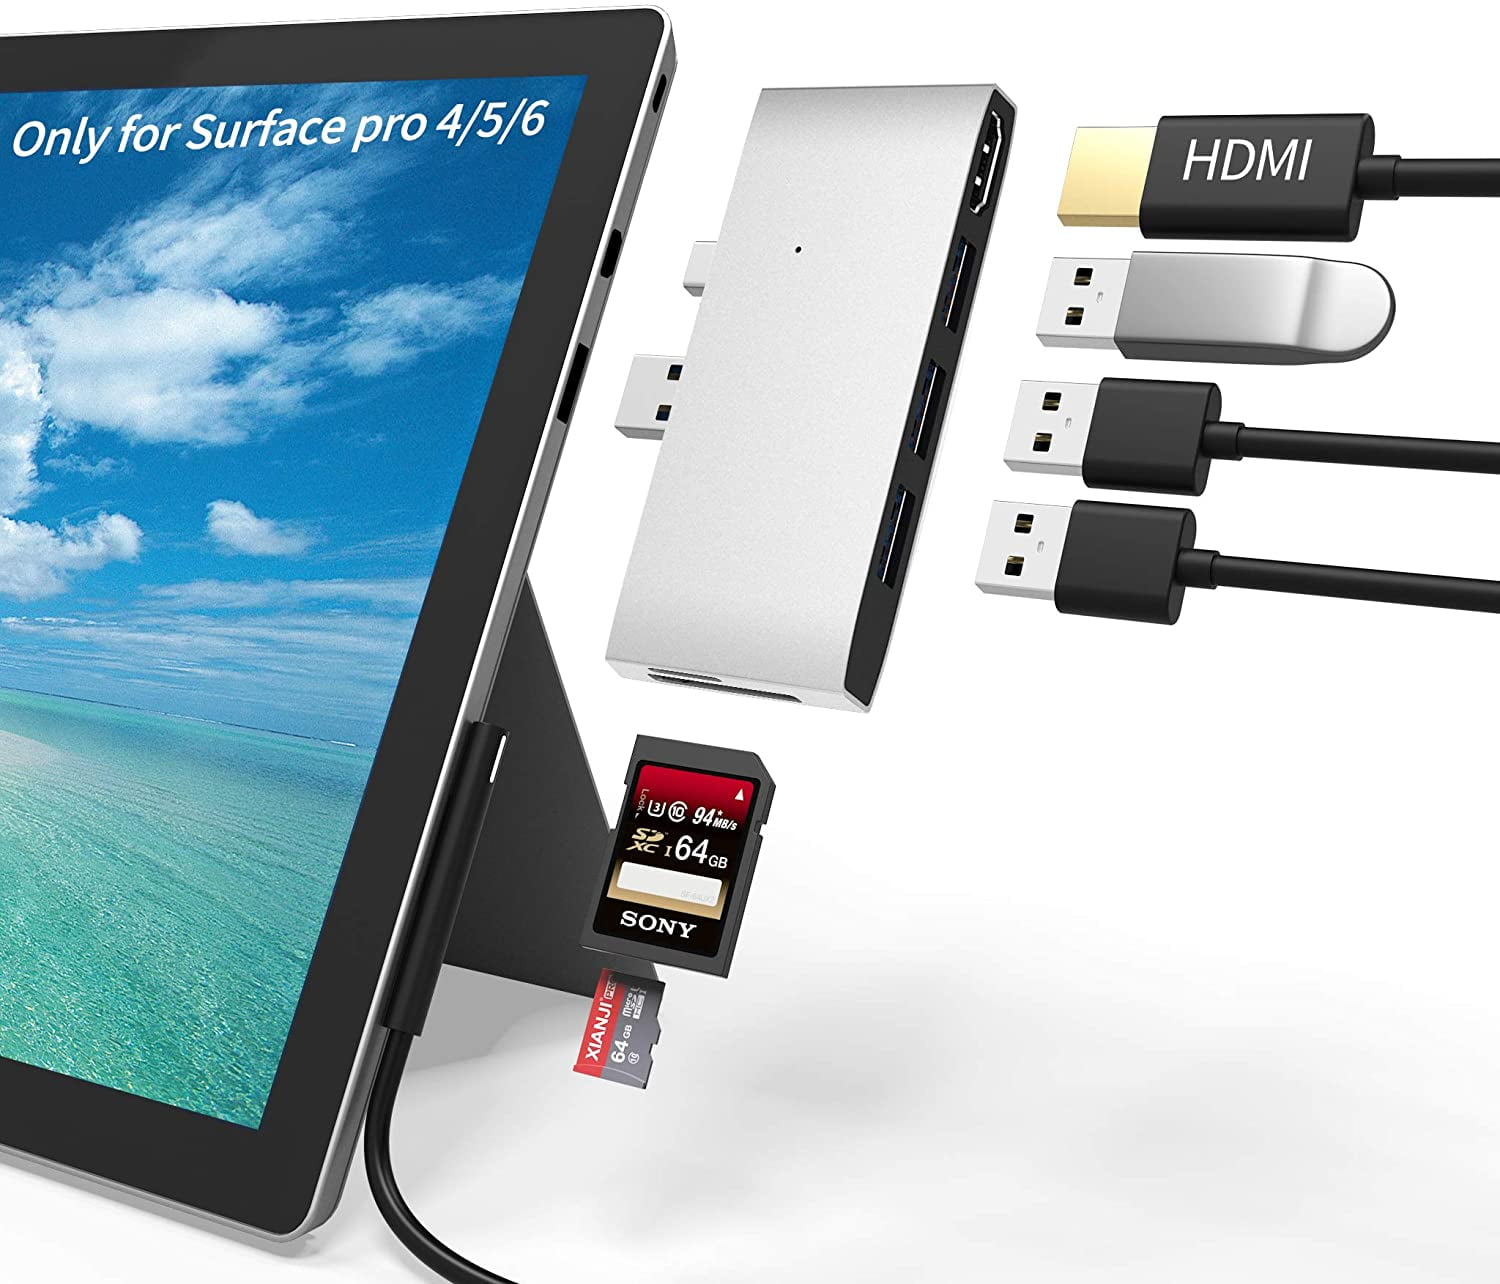 Surface Pro Dock for Surface Pro 4/Pro 5/Pro 6 USB Hub Docking Station with  Gigabit Ethernet, 4K HDMI VGA DP Display, 3xUSB 3.0, Audio Out, USB C